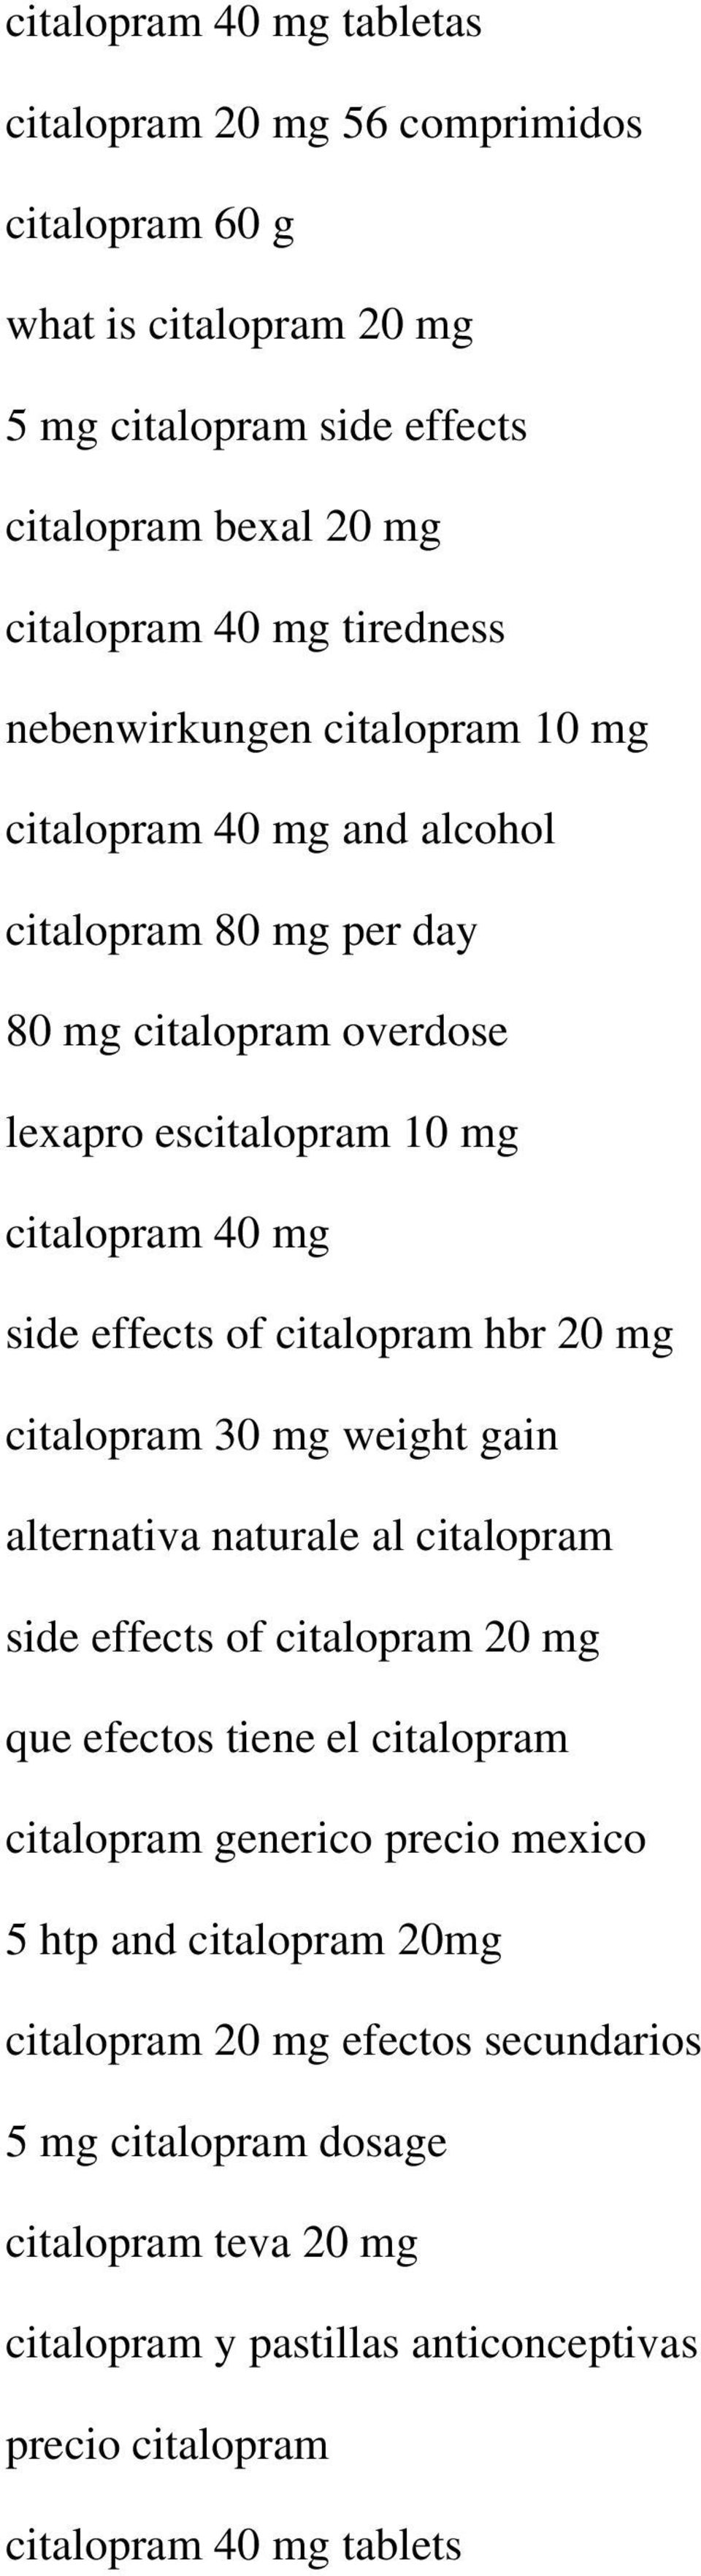 citalopram hbr 20 mg citalopram 30 mg weight gain alternativa naturale al citalopram side effects of citalopram 20 mg que efectos tiene el citalopram citalopram generico precio